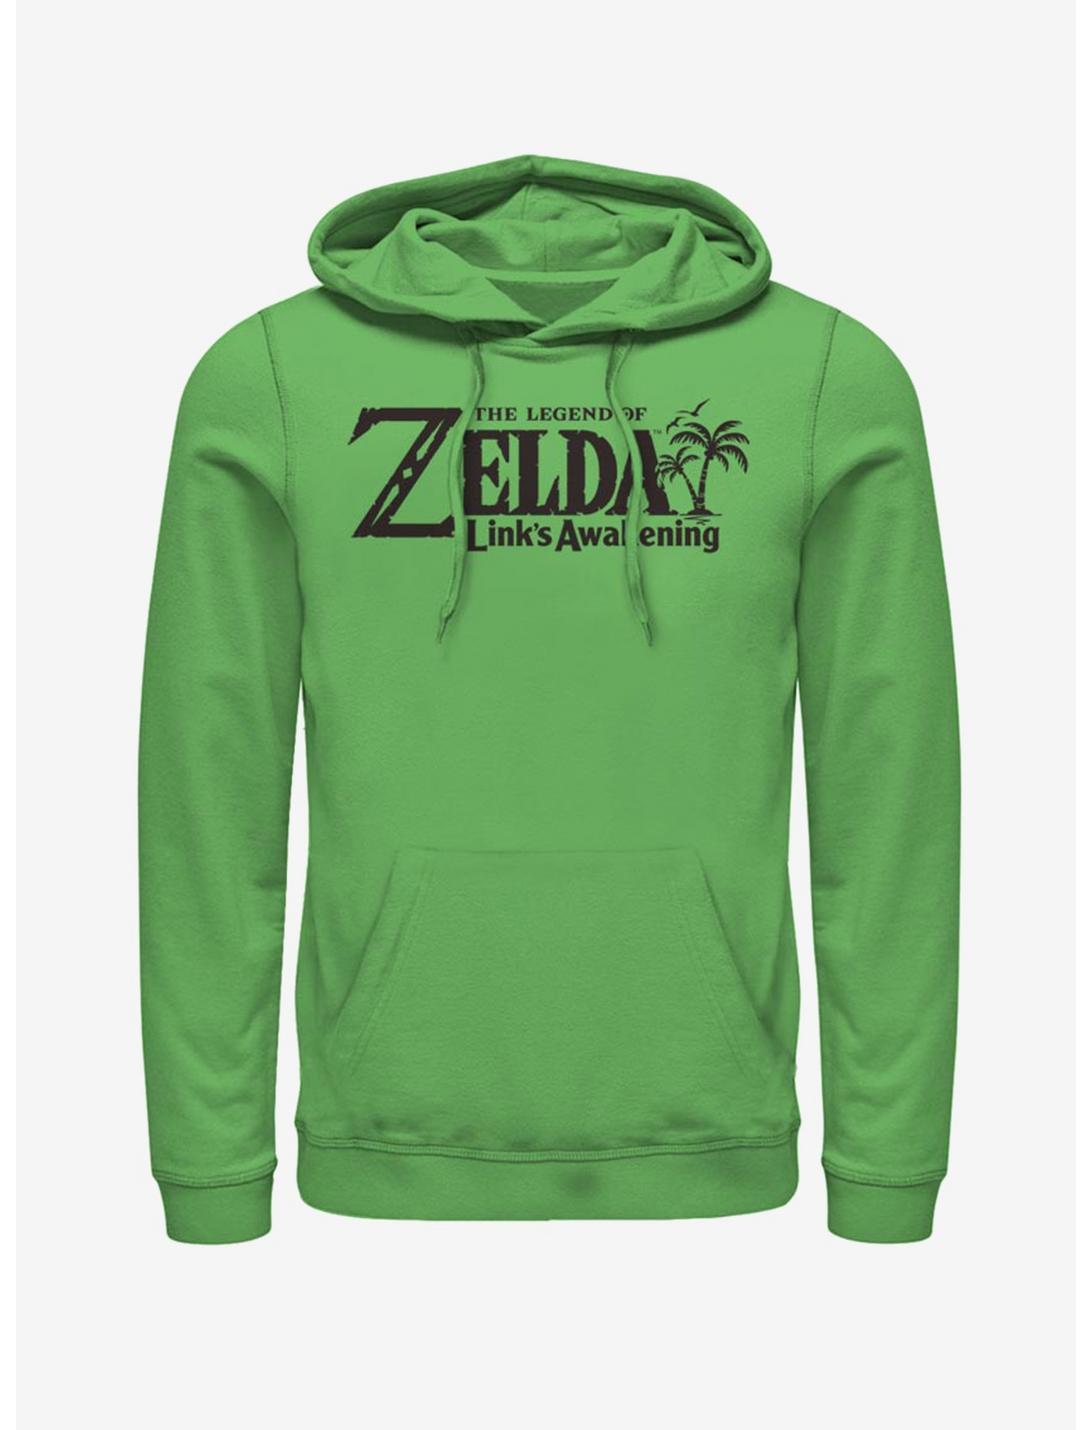 Nintendo The Legend of Zelda Logo T-Shirt, KELLY, hi-res